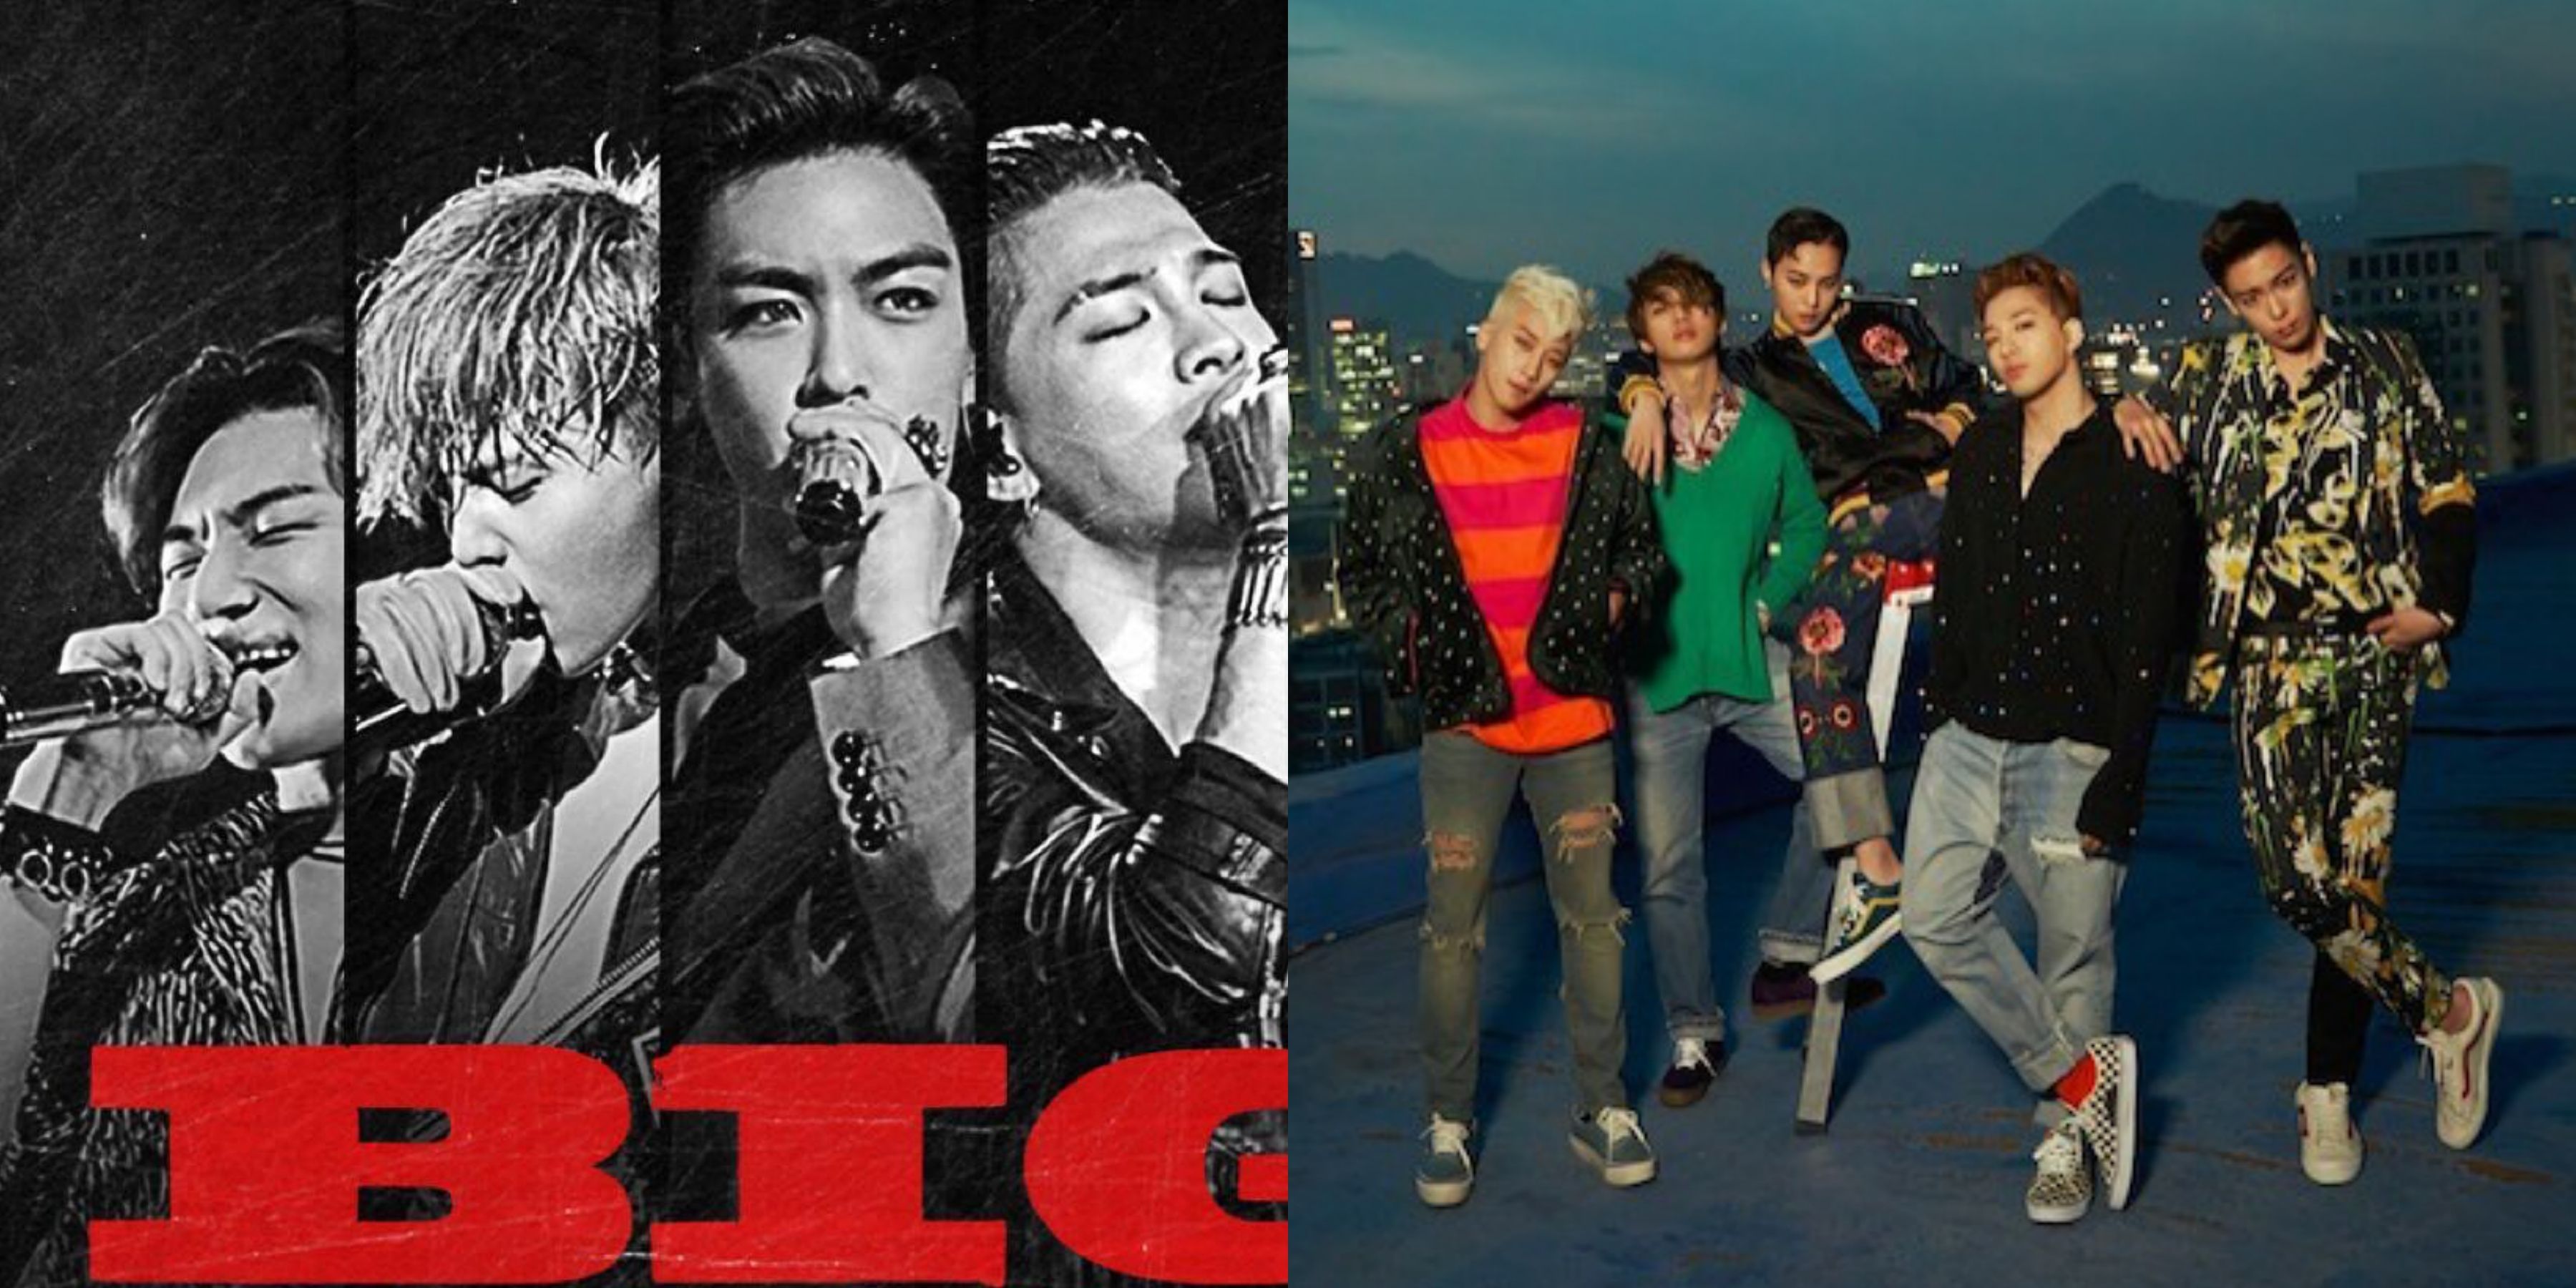 Bigbang睽違三年終於回歸 天團bigbang確定以四人形式登上美國最大音樂節coachella舞台